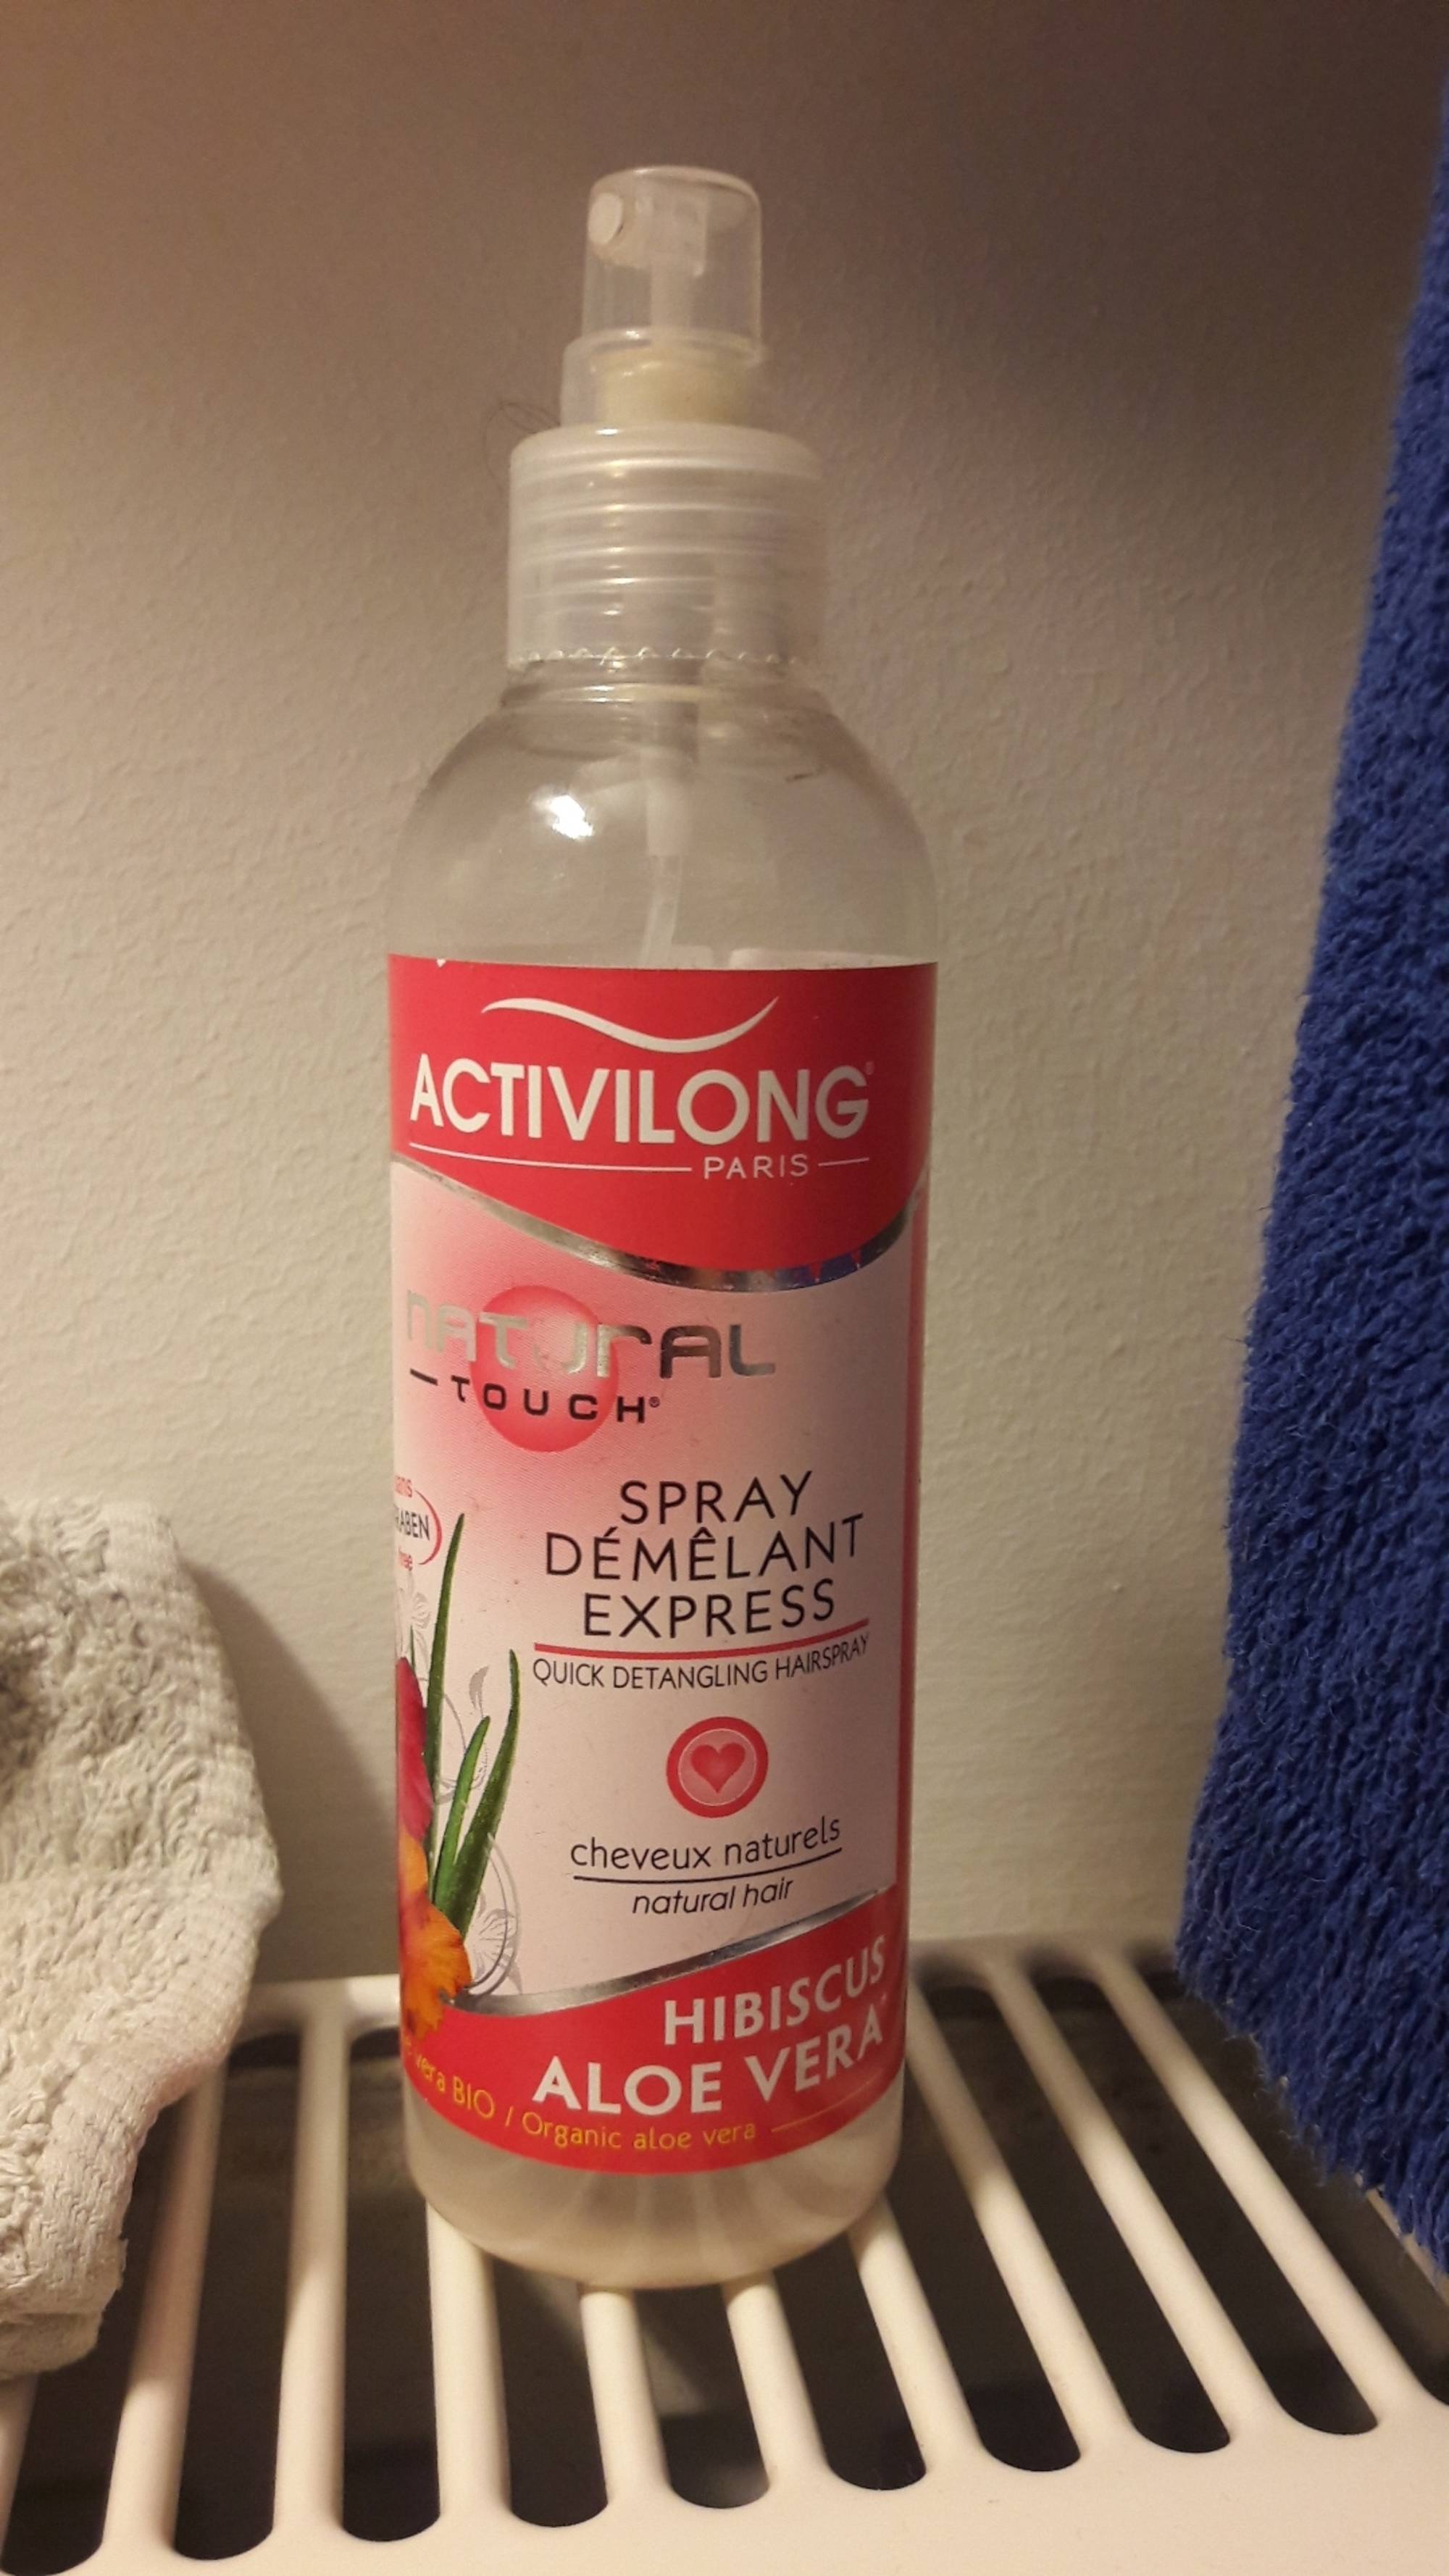 ACTIVILONG - Natural touch - Spray démélant express